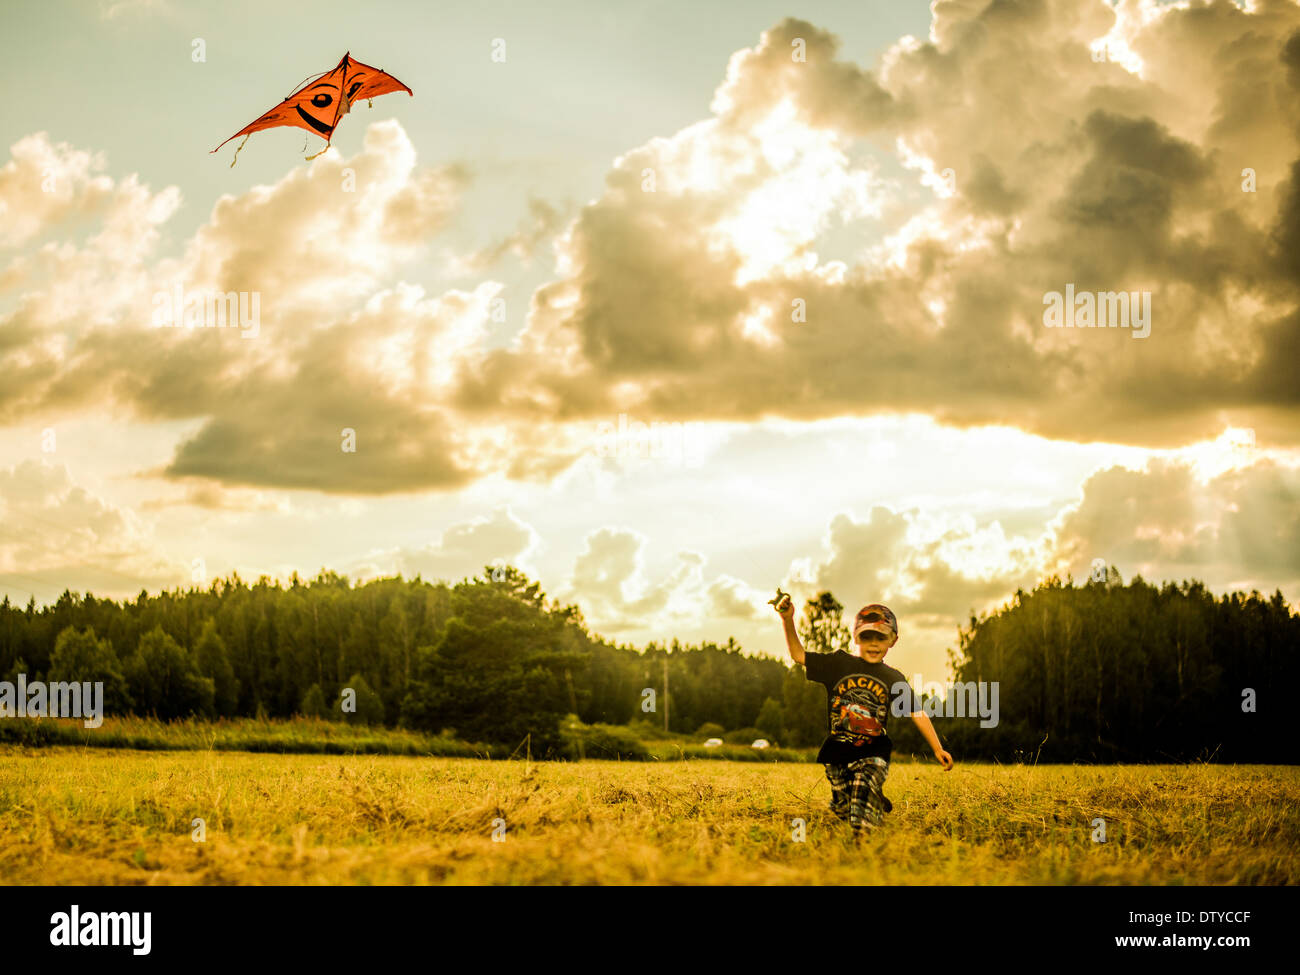 Caucasian boy flying kite in rural field Stock Photo